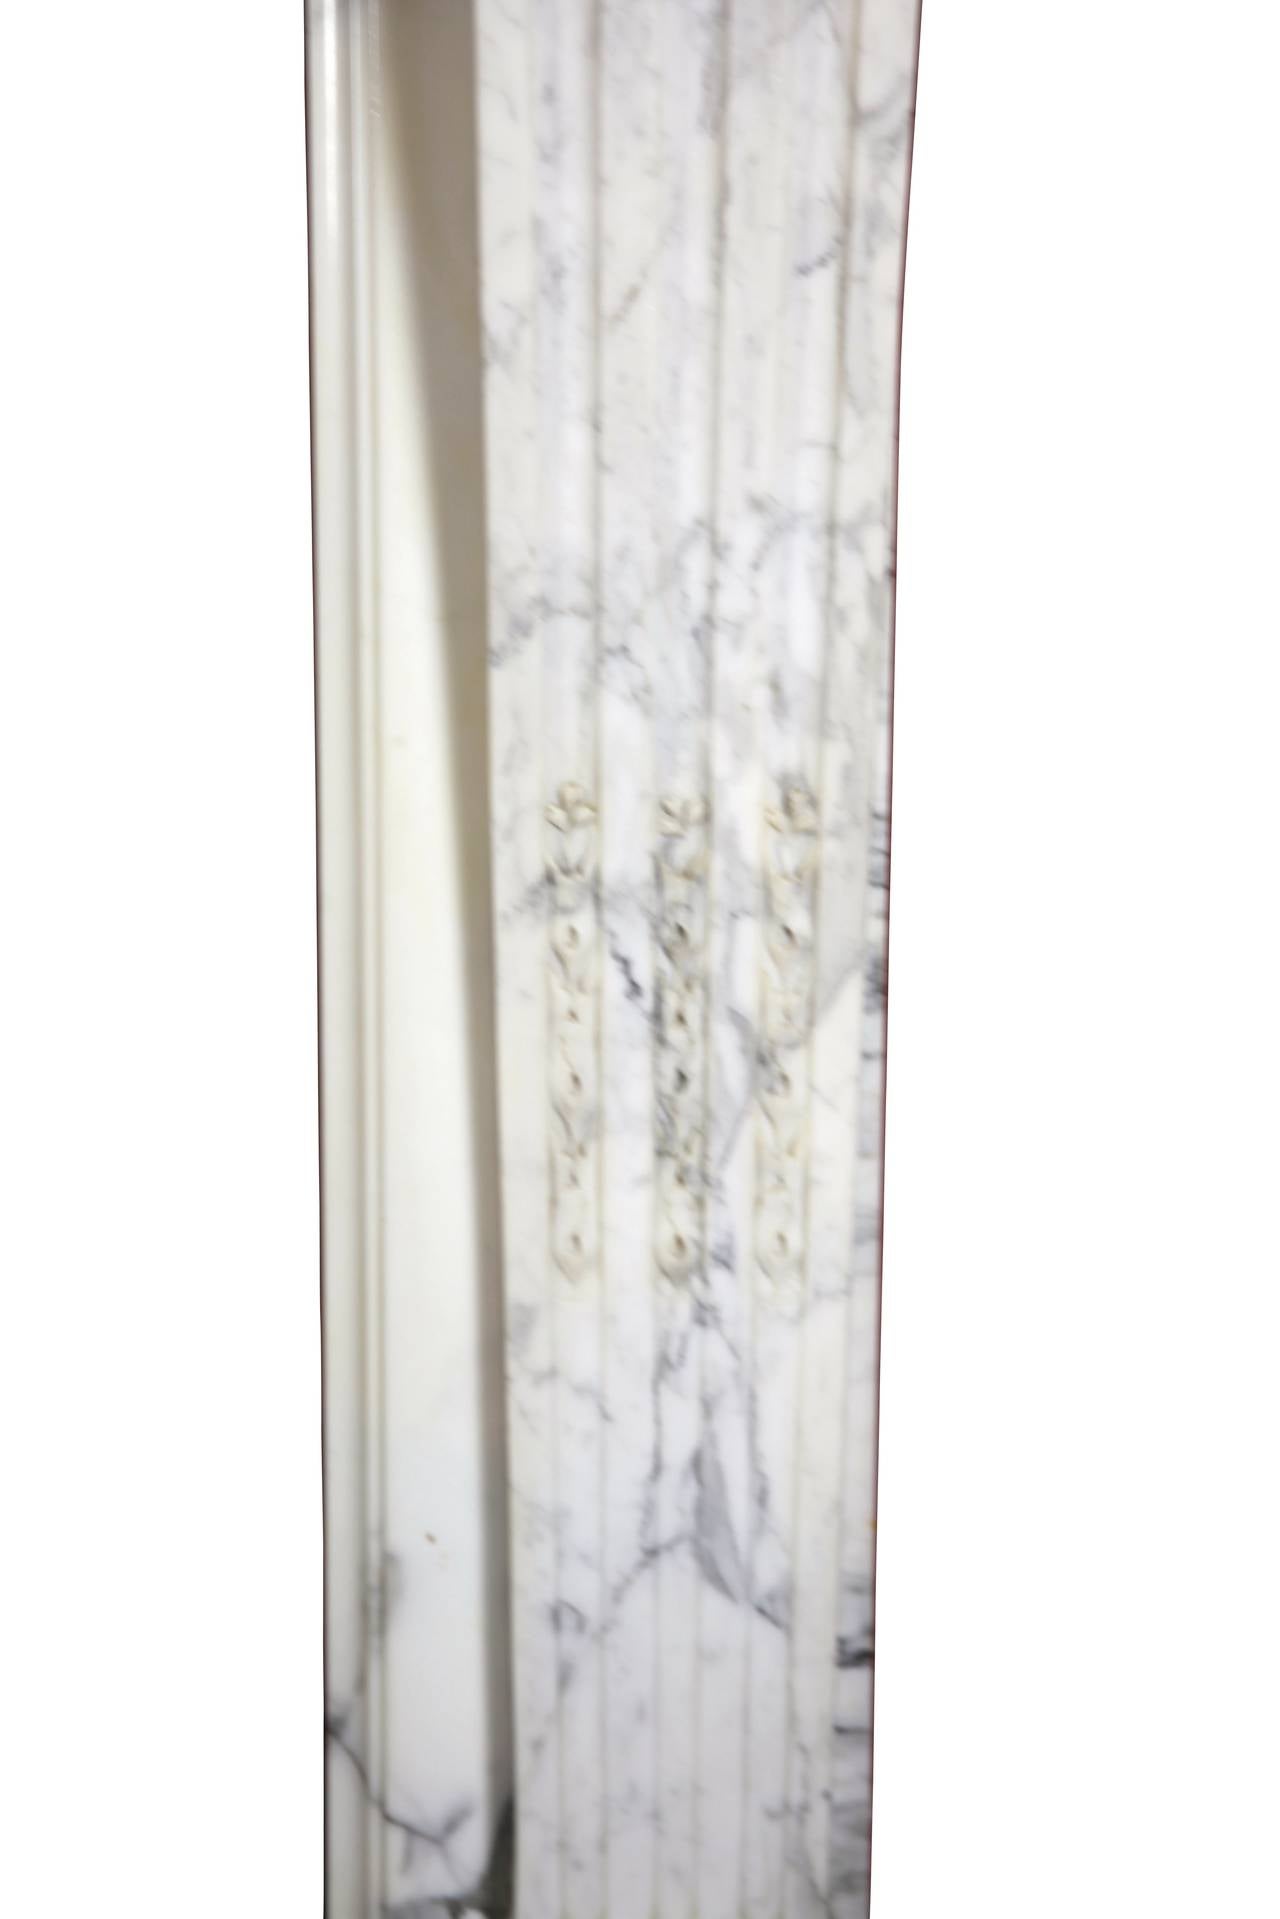 Carved 19th Century Blanc de Carrara Marble Antique Fireplace Mantel